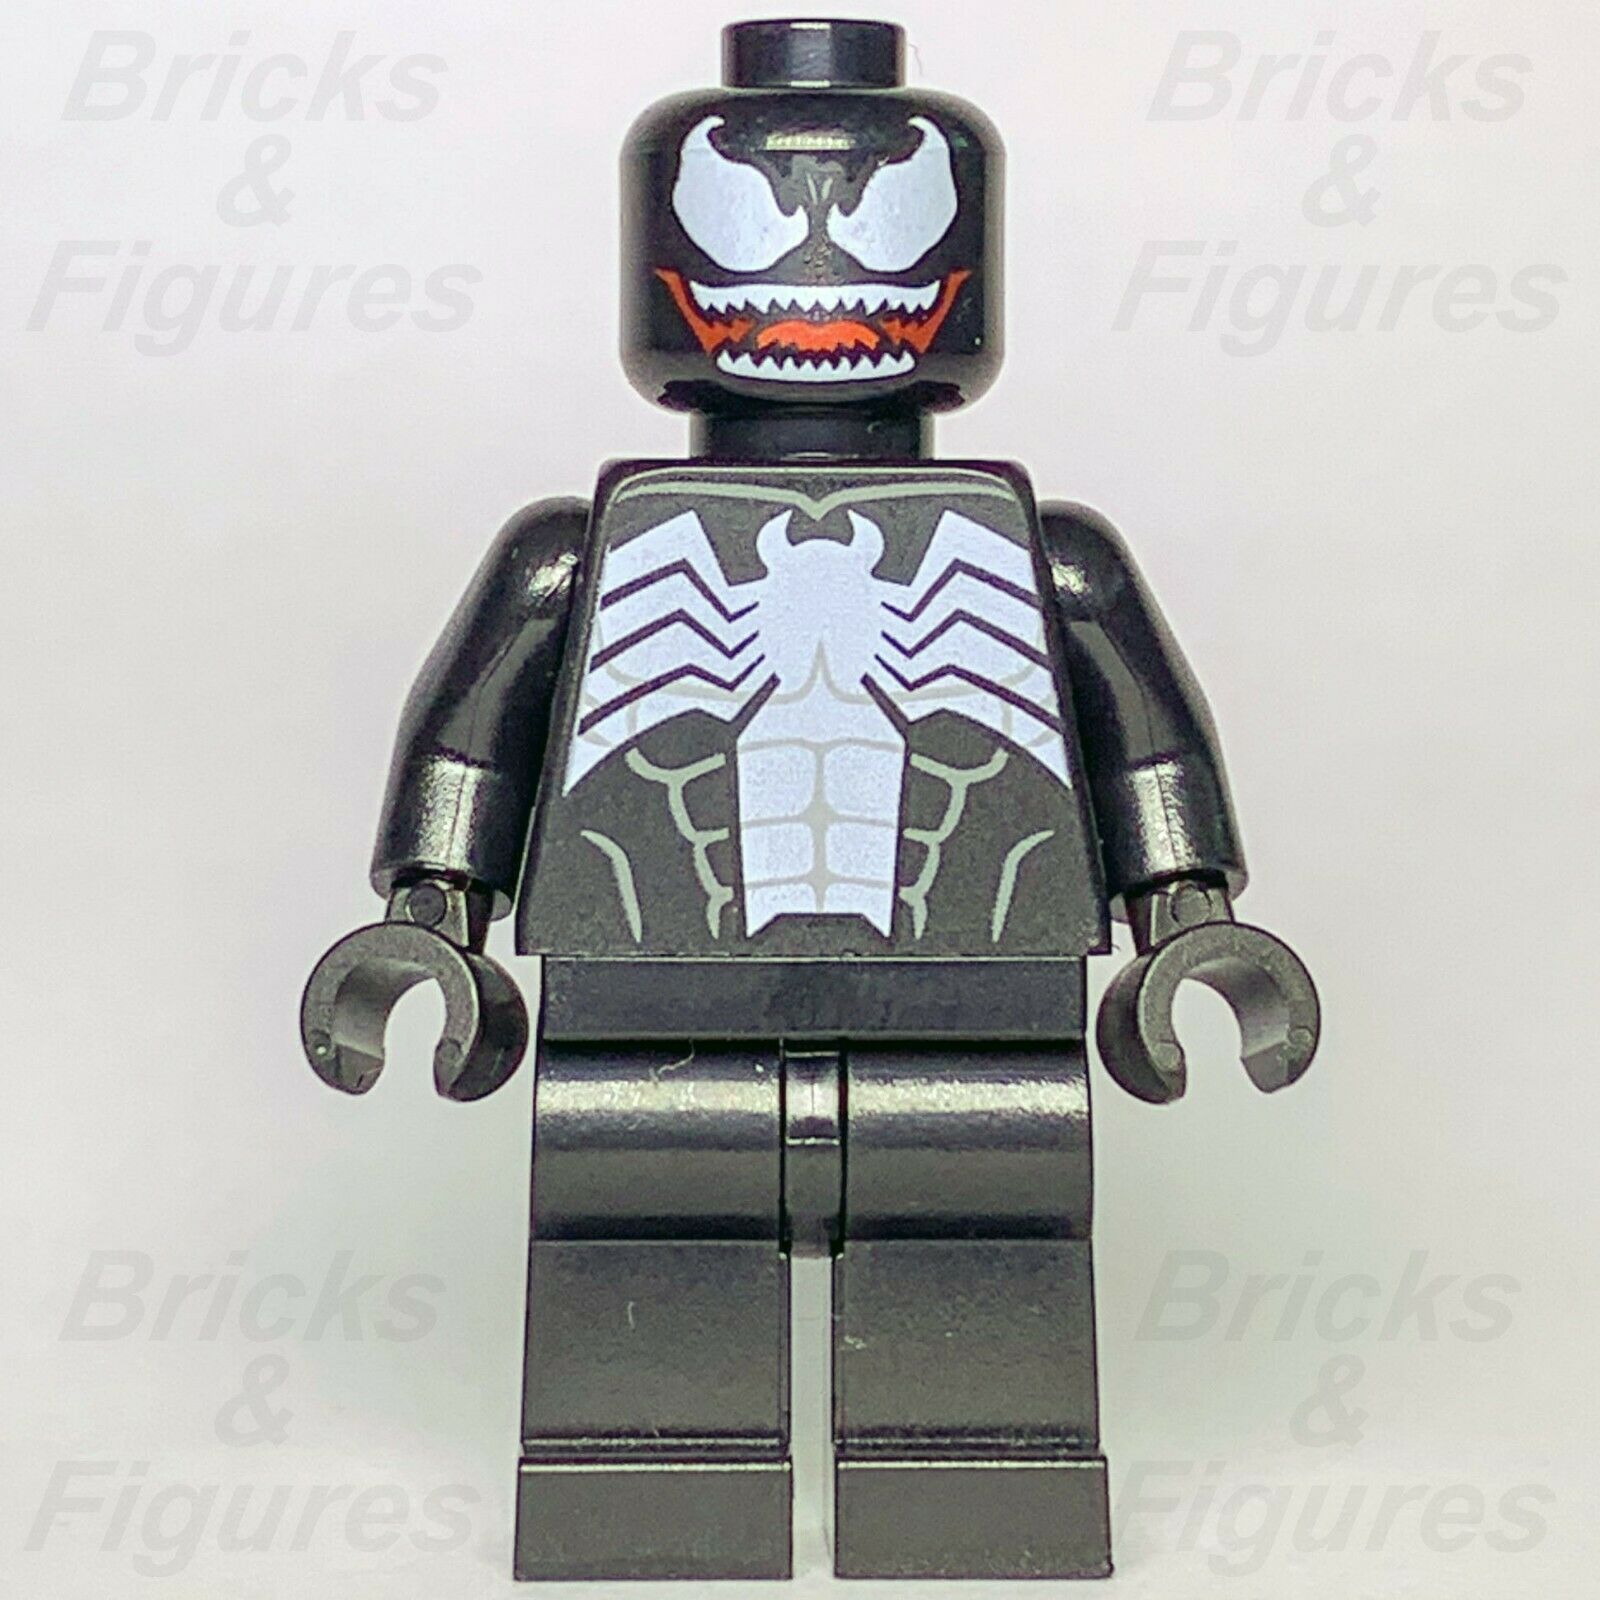 LEGO Marvel Super Heroes Minifigure - Venom - Extra Extra Bricks